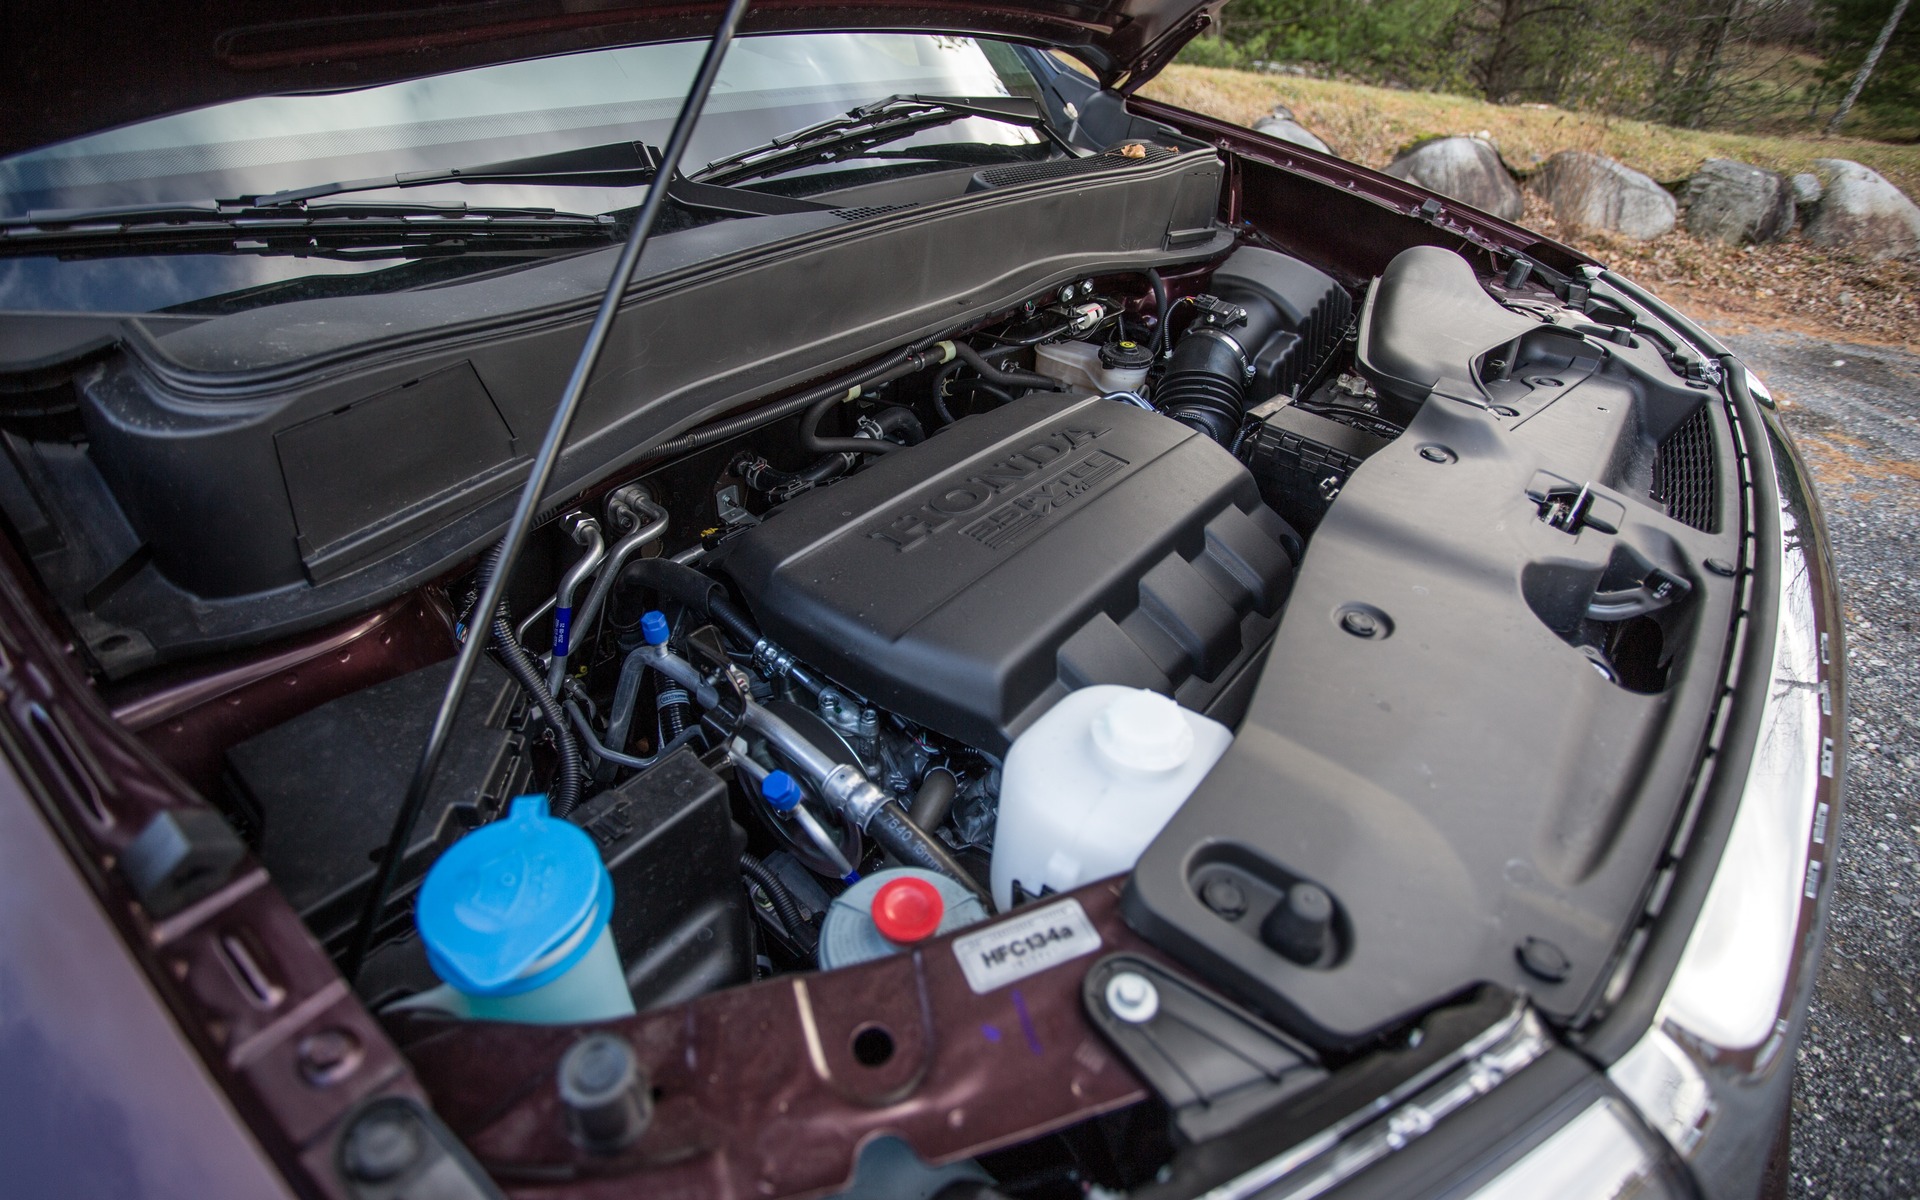 The 250-horsepower V6 engine found in many Honda/Acura products.